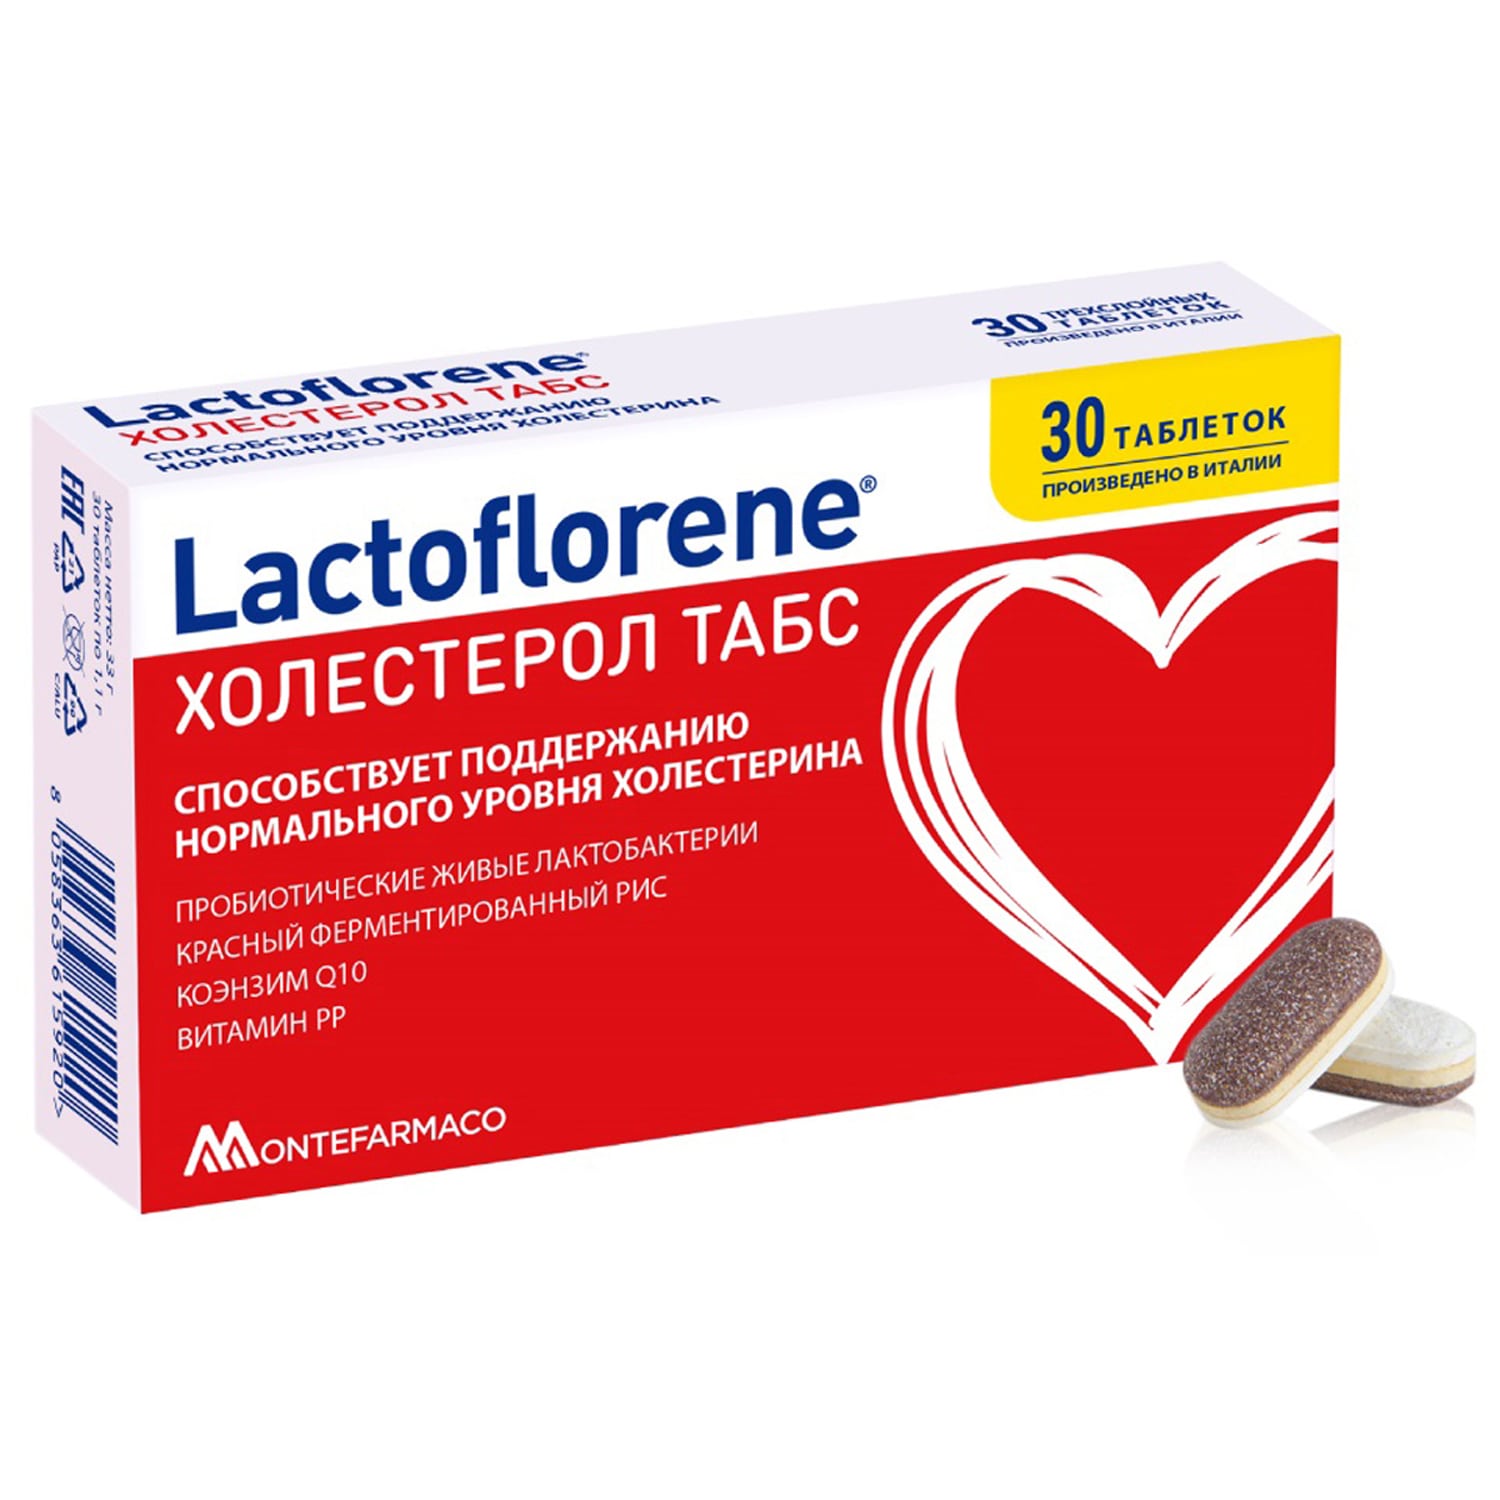 Lactoflorene Пробиотический комплекс «Холестерол табс», 30 таблеток (Lactoflorene, ) lactoflorene холестерол таблетки 30 шт